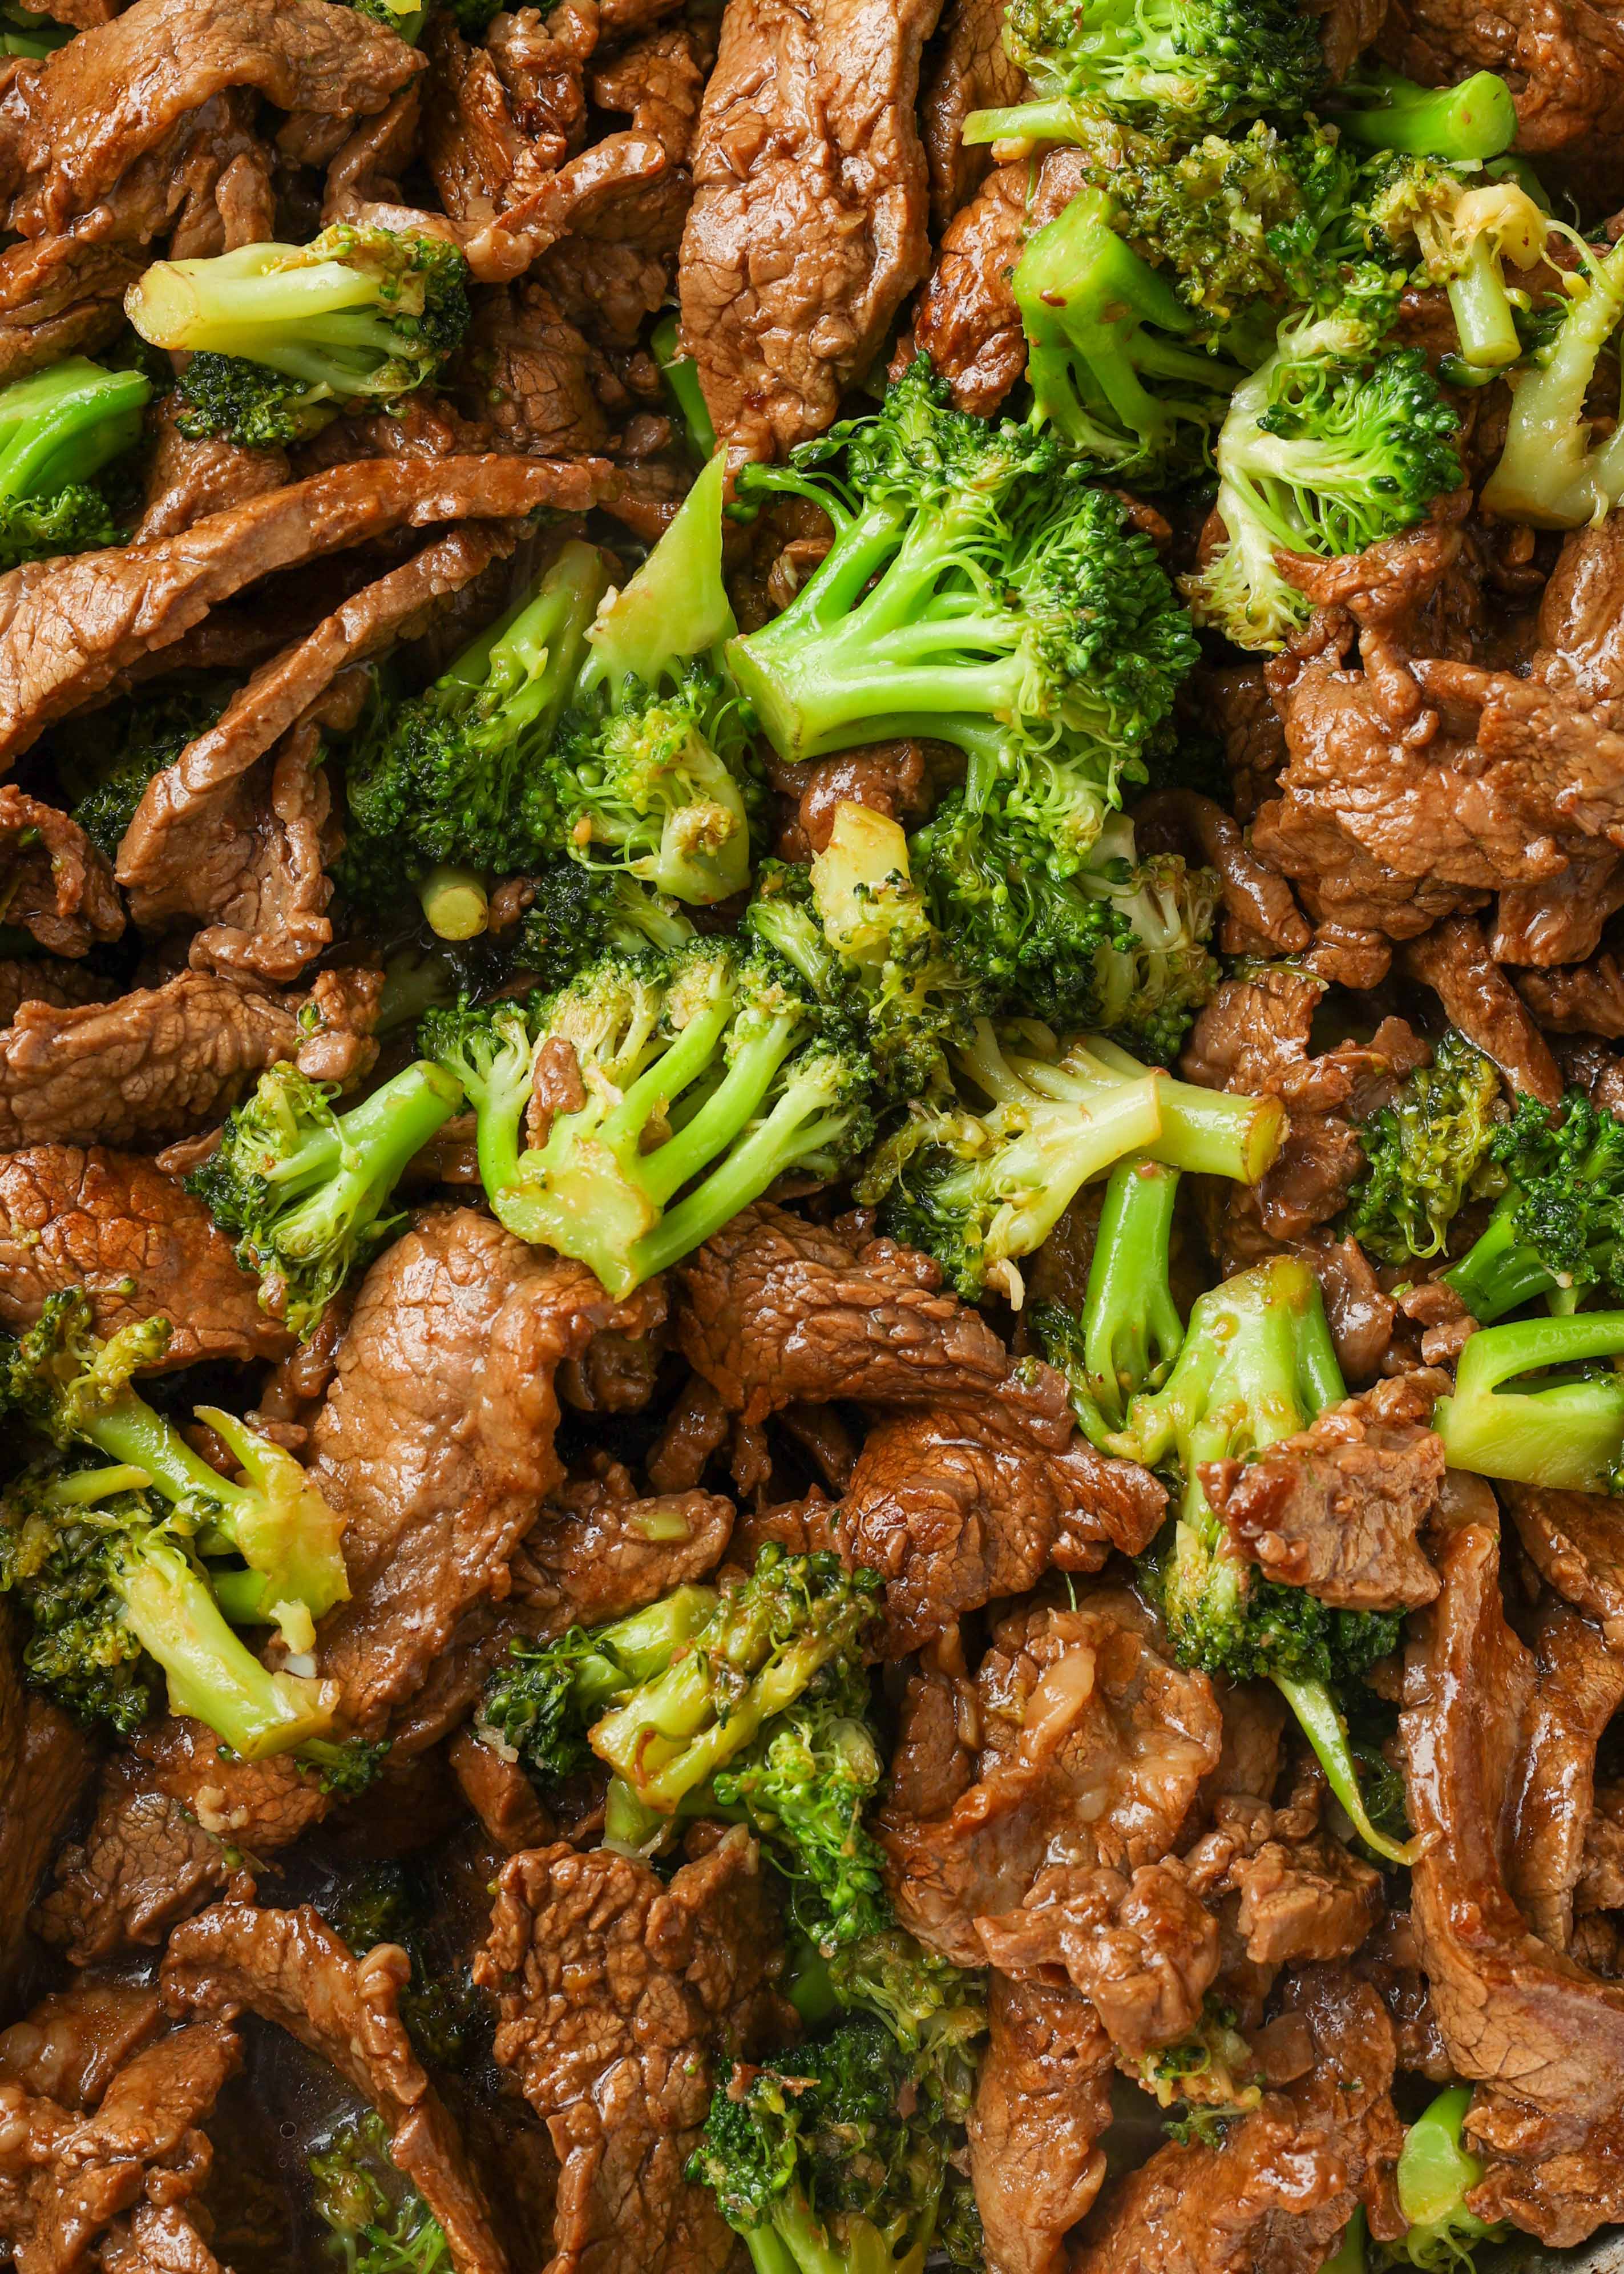 Best Beef & Broccoli Recipe - How to Make Beef & Broccoli